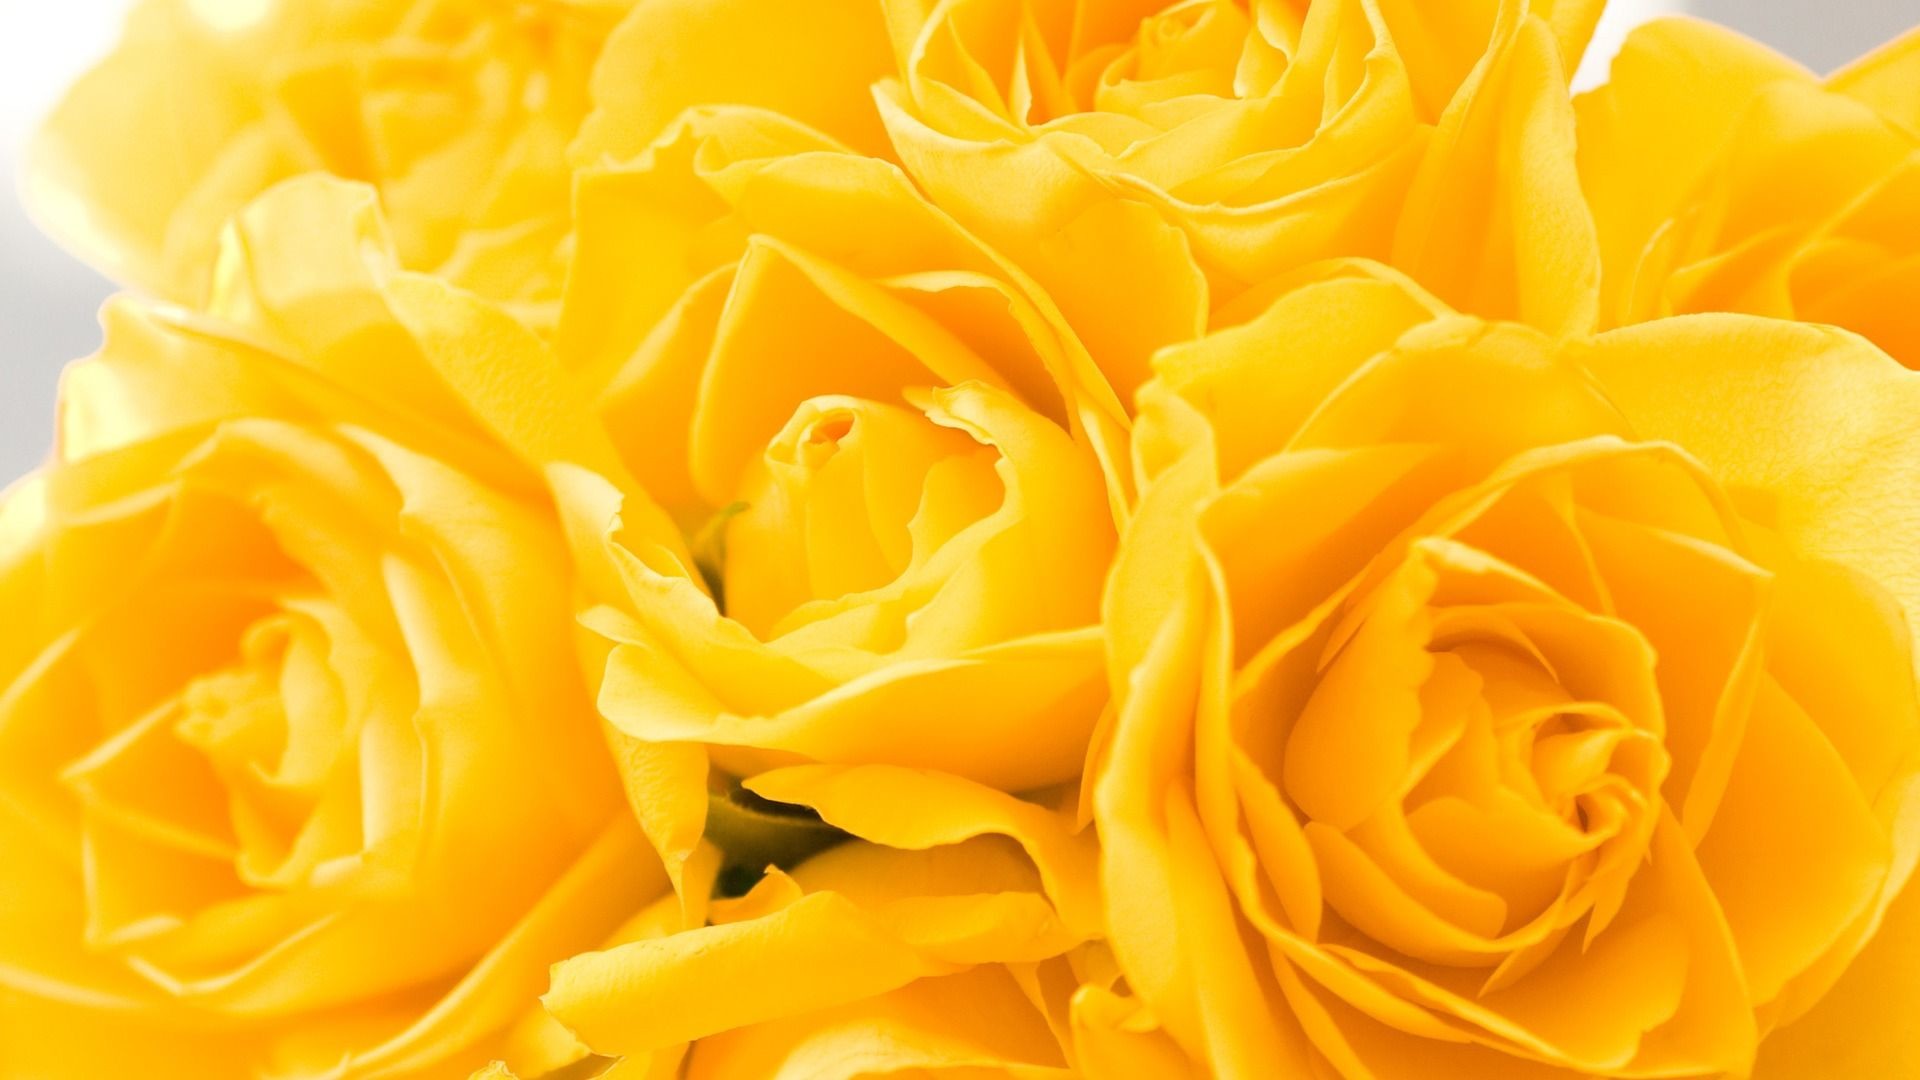 1920x1080 yellow roses | Yellow Roses 1920 x 1080 Wallpaper